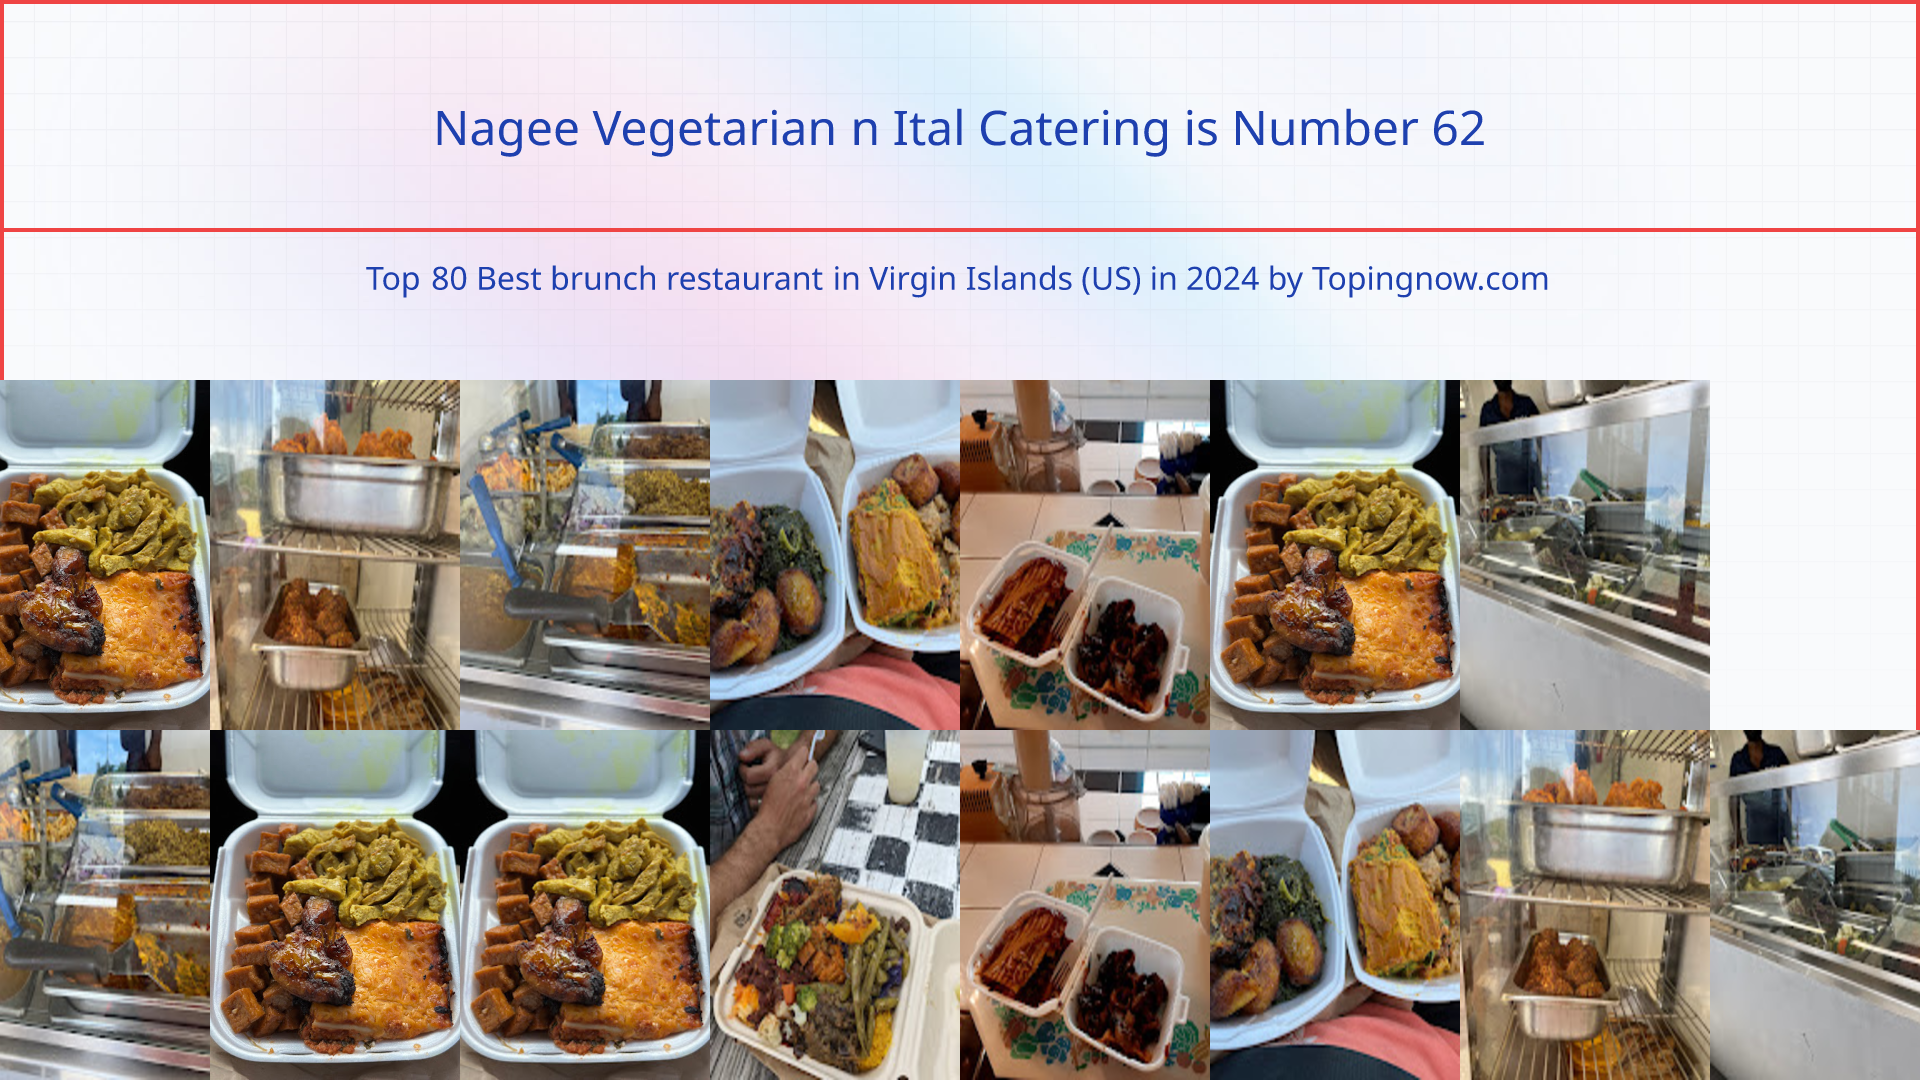 Nagee Vegetarian n Ital Catering: Top 80 Best brunch restaurant in Virgin Islands (US) in 2024